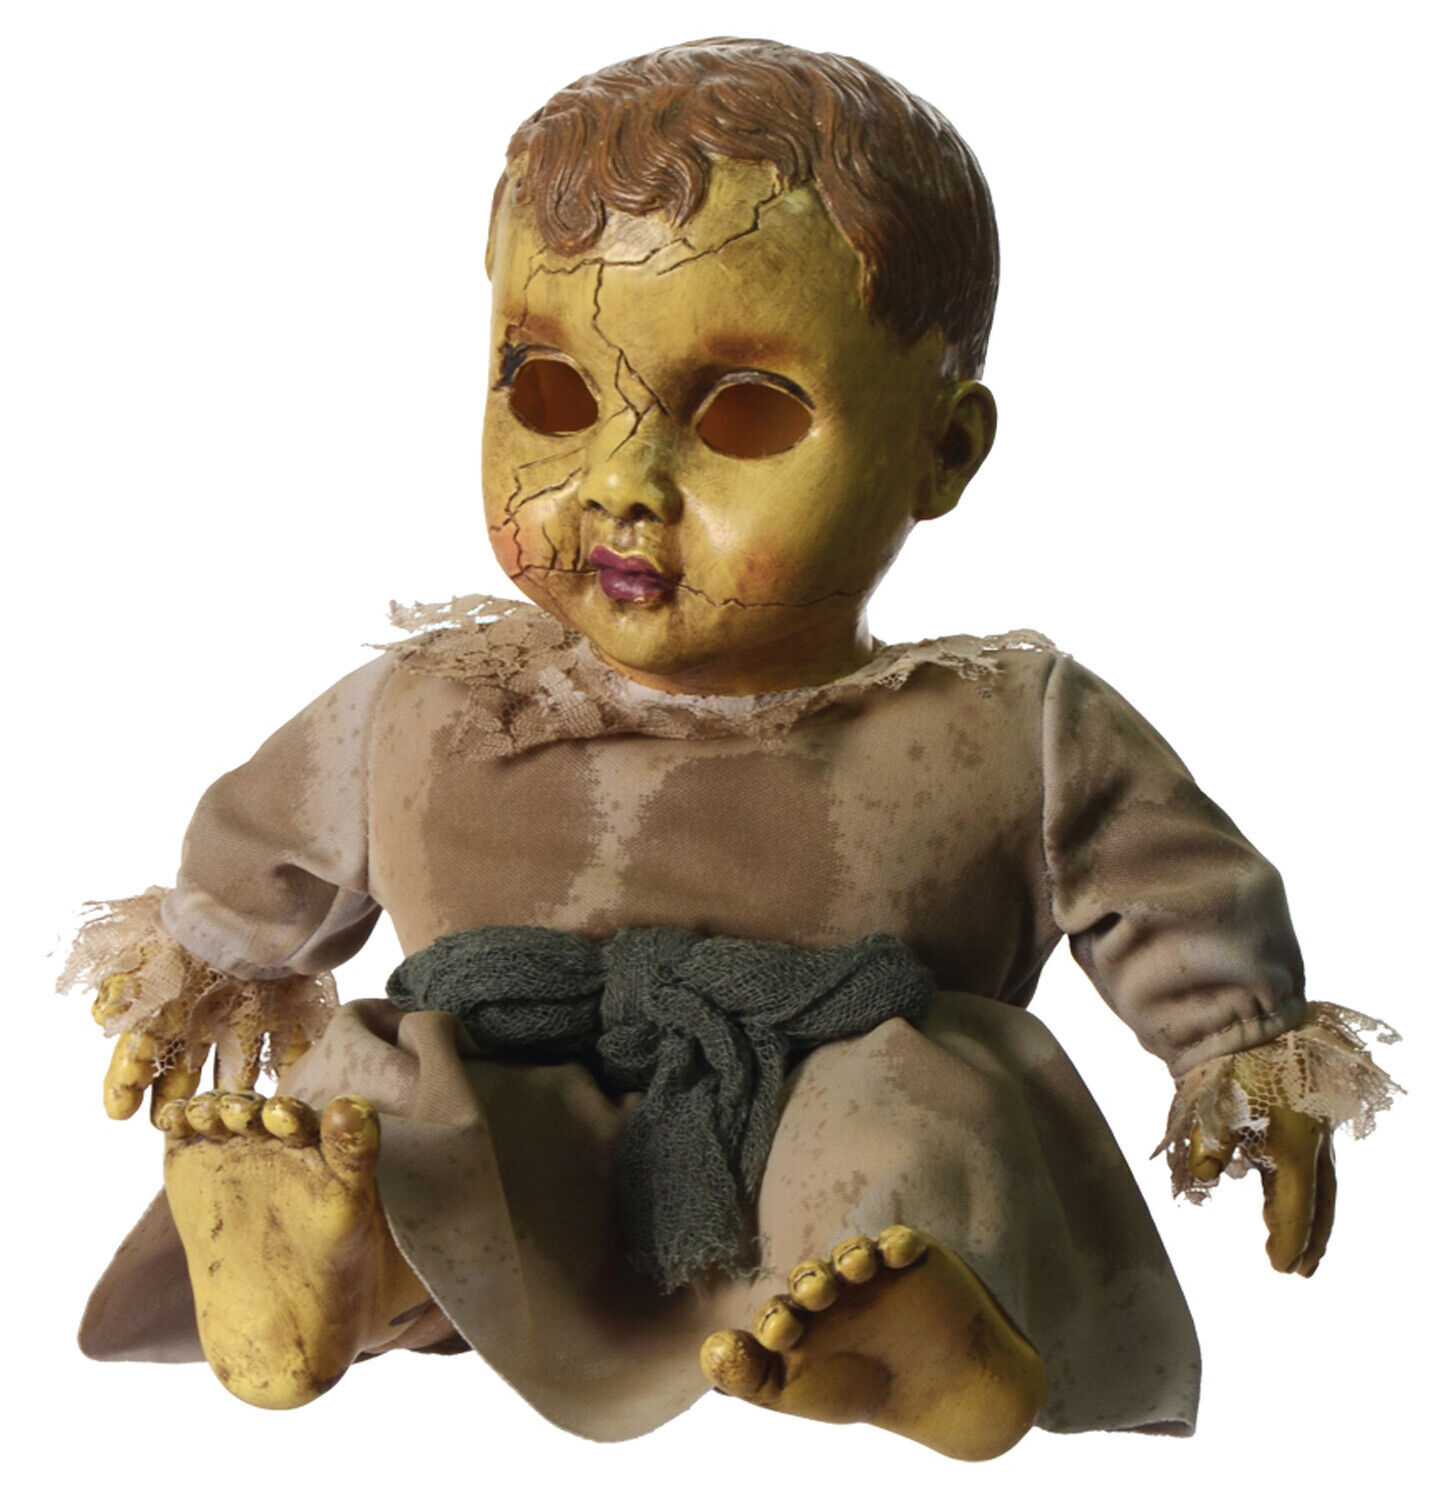 Creepy Gothic Horror HAUNTED BABY DOLL Spooky Halloween Decor Haunted House Prop